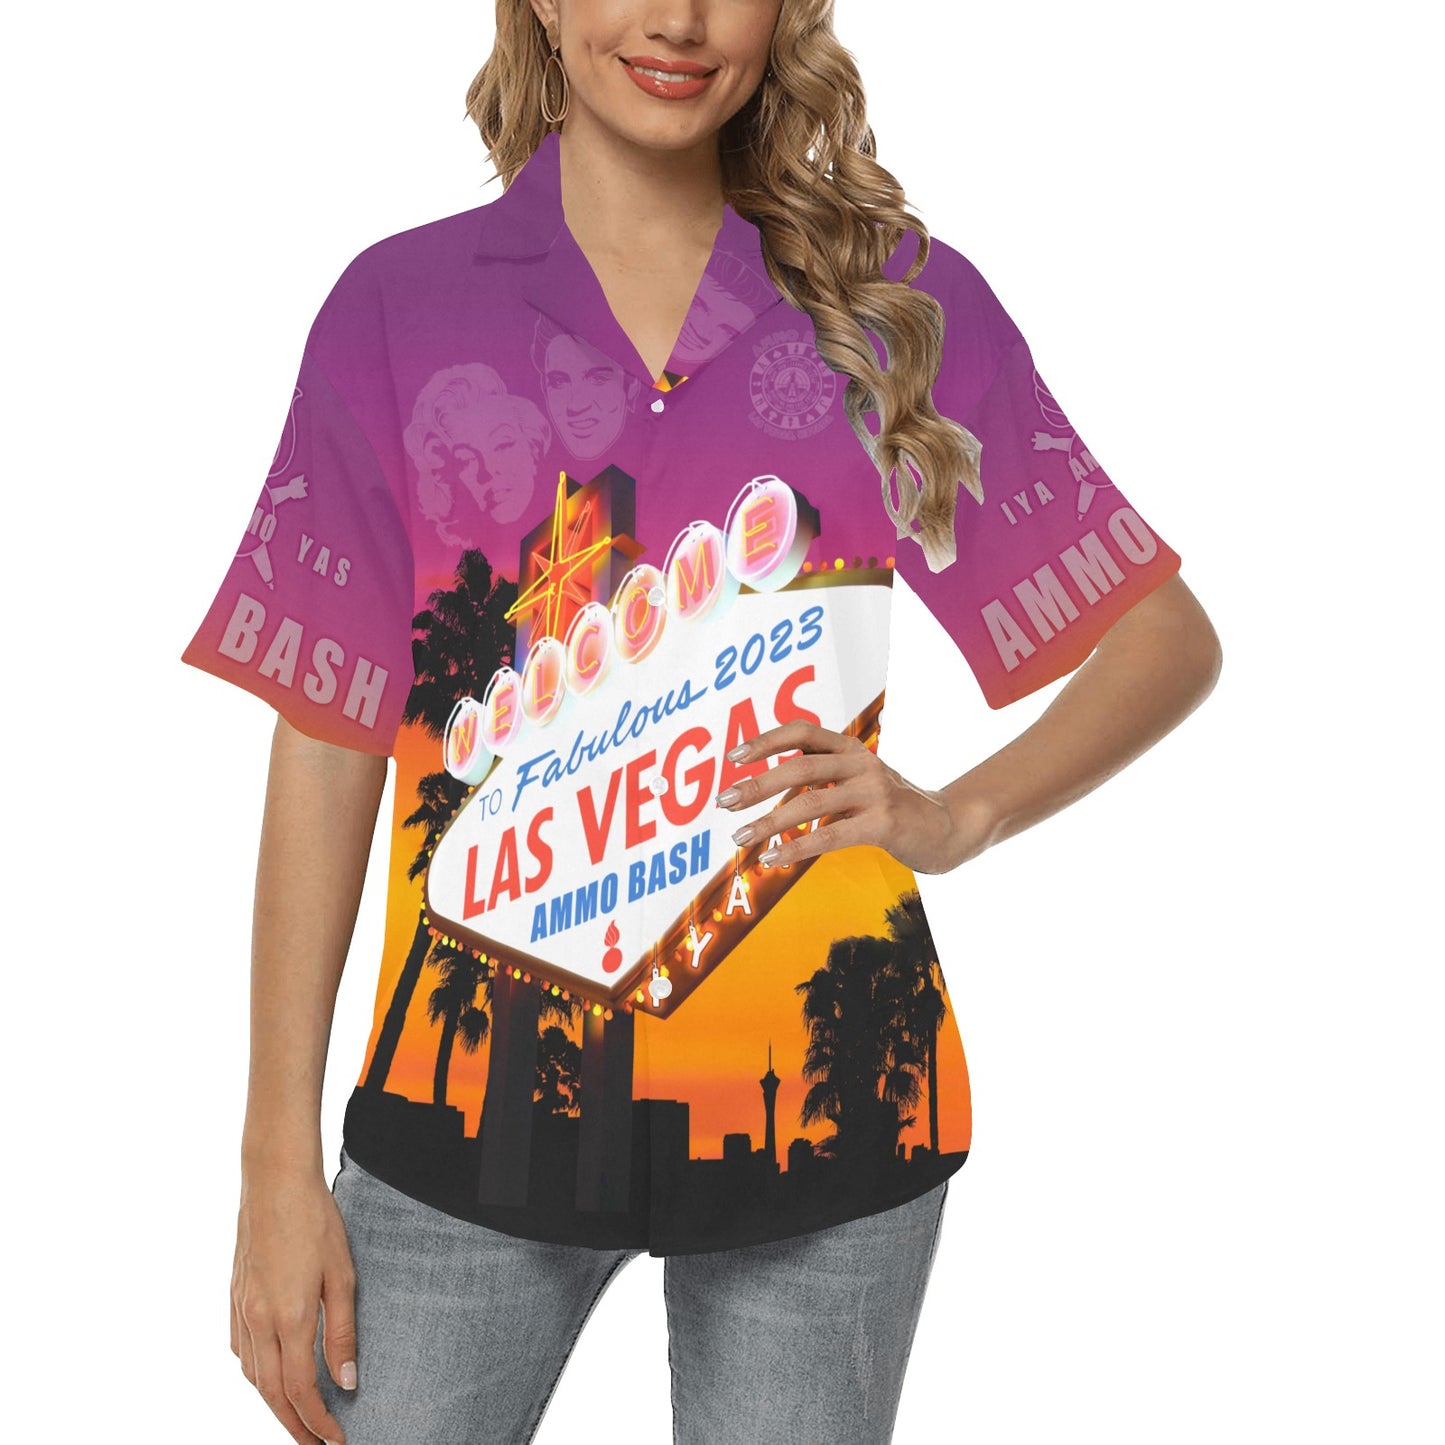 AMMO Bash 2023 AVA STAFF MEMBER ONLY Las Vegas Nevada Ellis Island Hotel Casino Brewery Womens Version Event Hawaiian Shirt